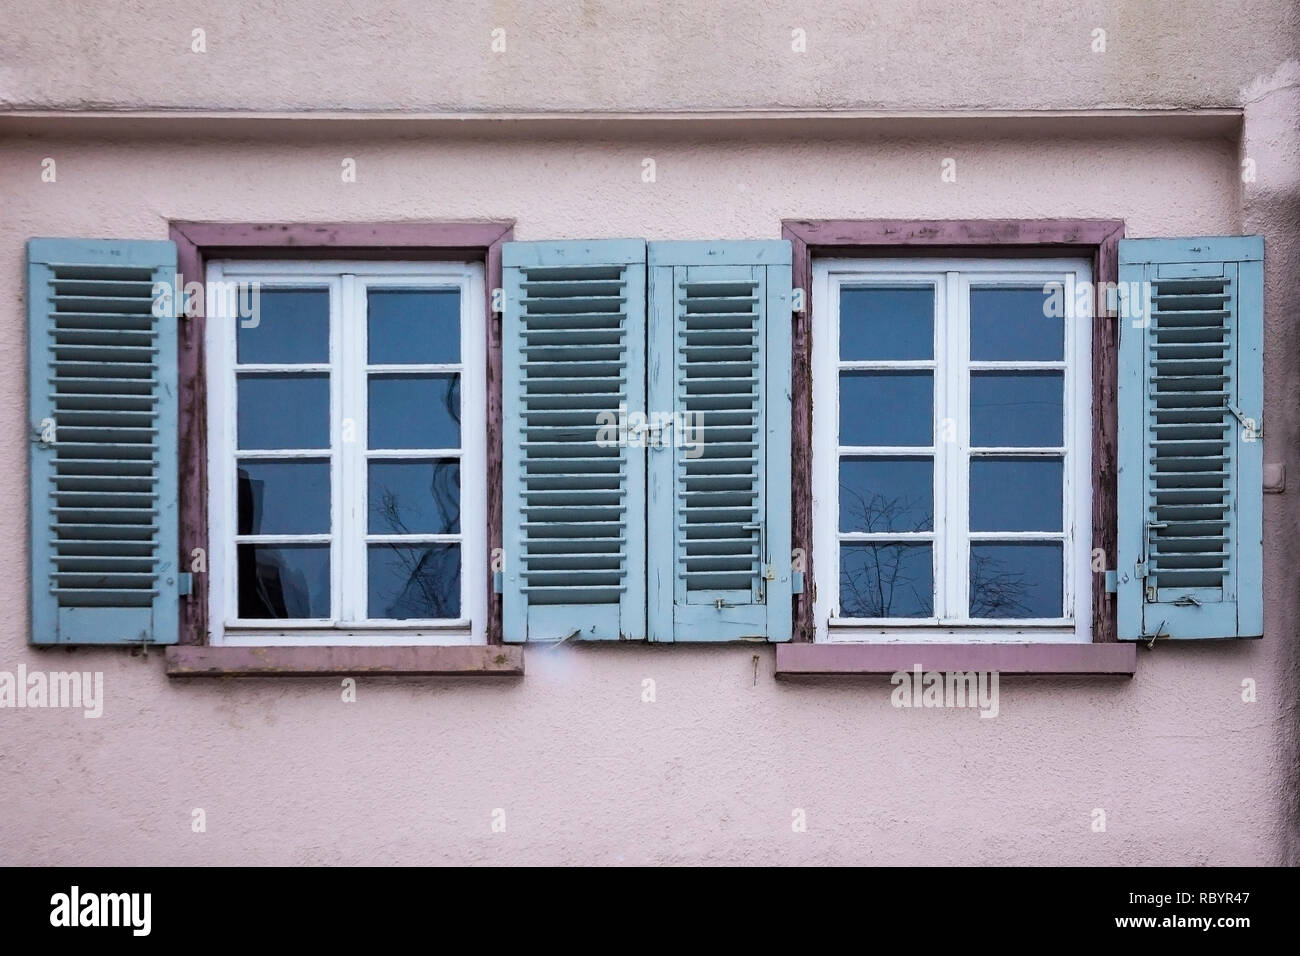 Window Shutter Wall Germany Stockfotos und -bilder Kaufen - Alamy